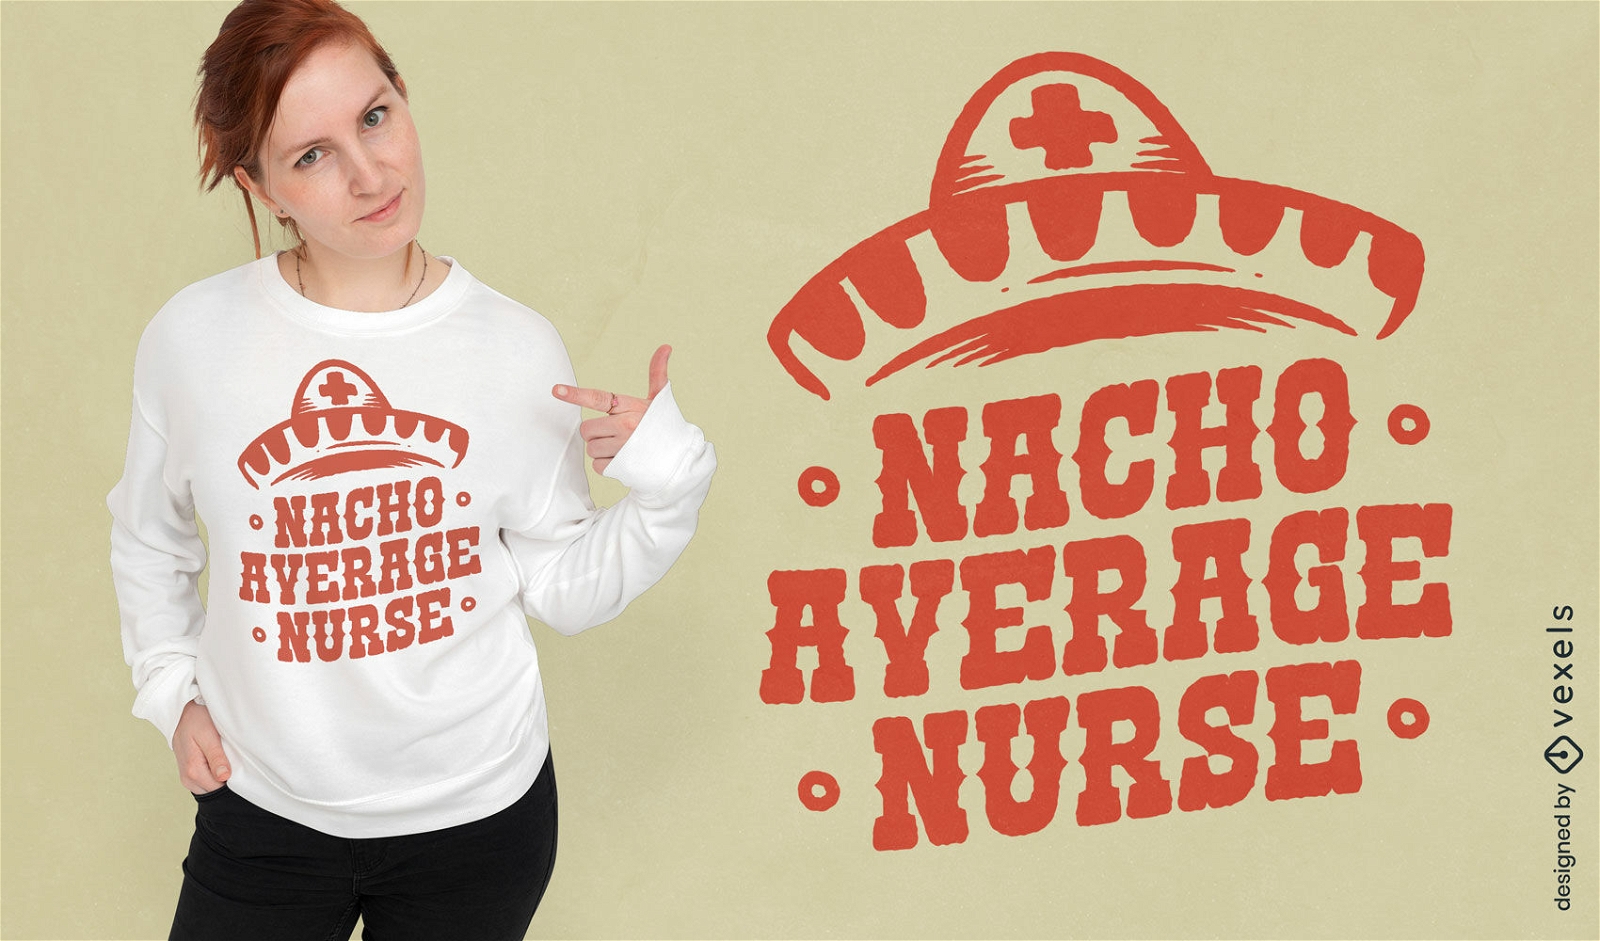 Cinco de mayo nurse t-shirt design